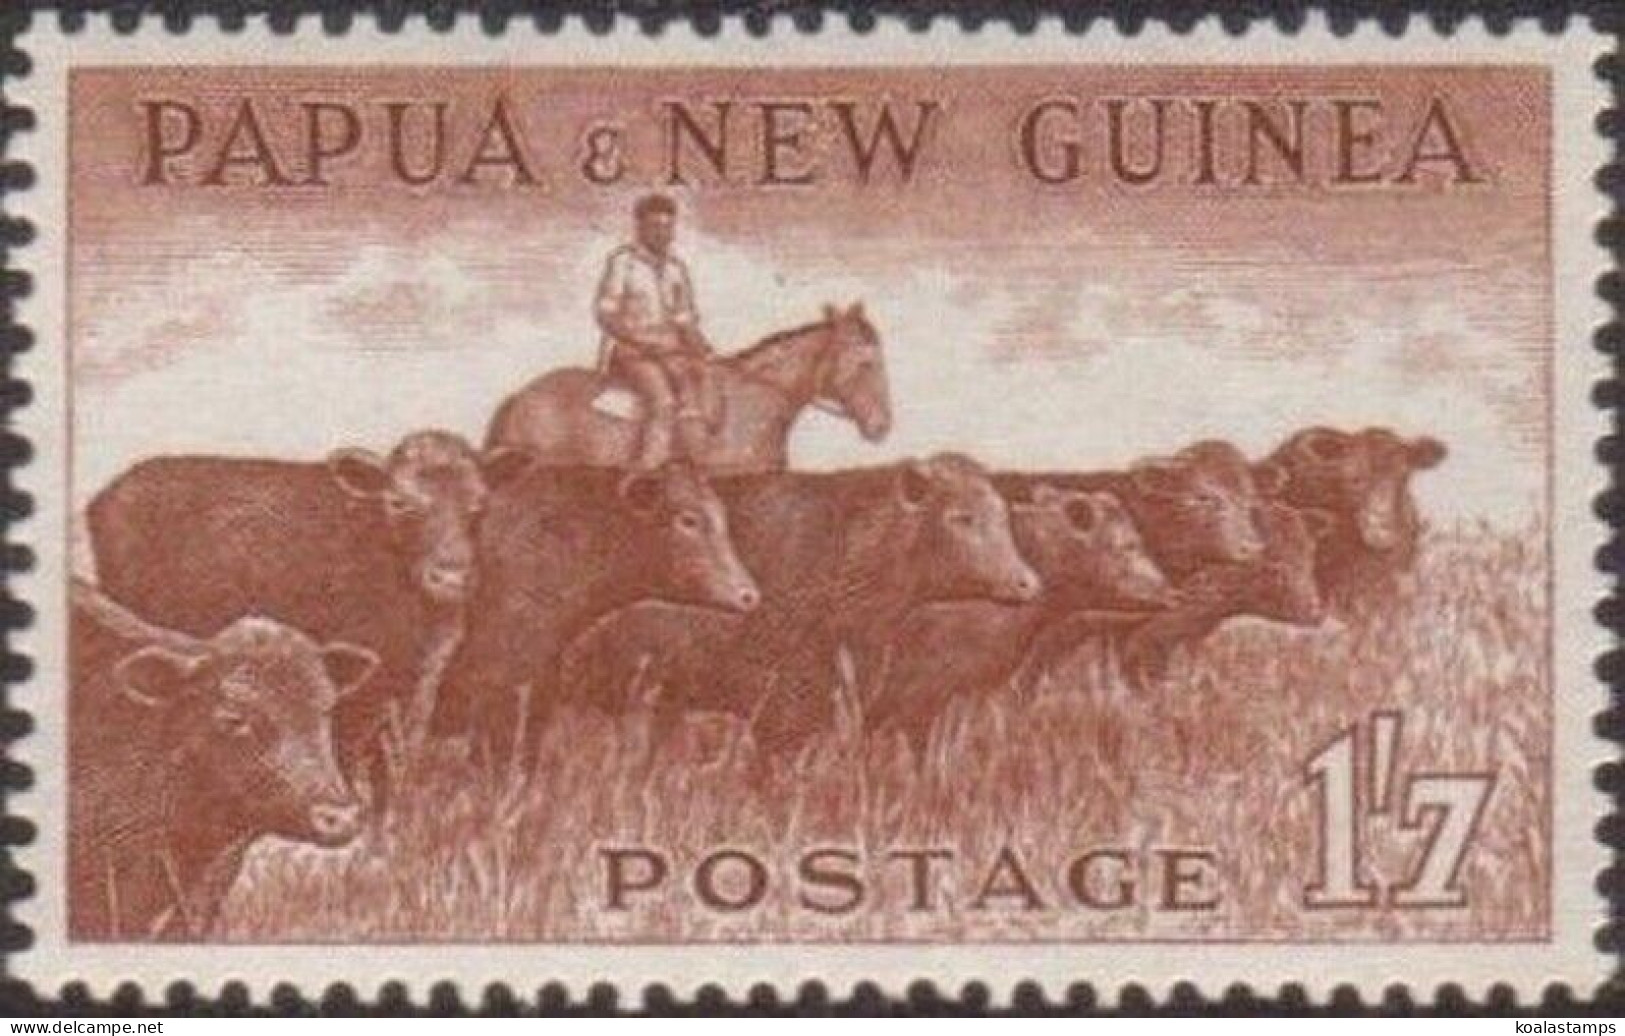 Papua New Guinea 1958 SG22 1/7d Cattle MNH - Papua New Guinea